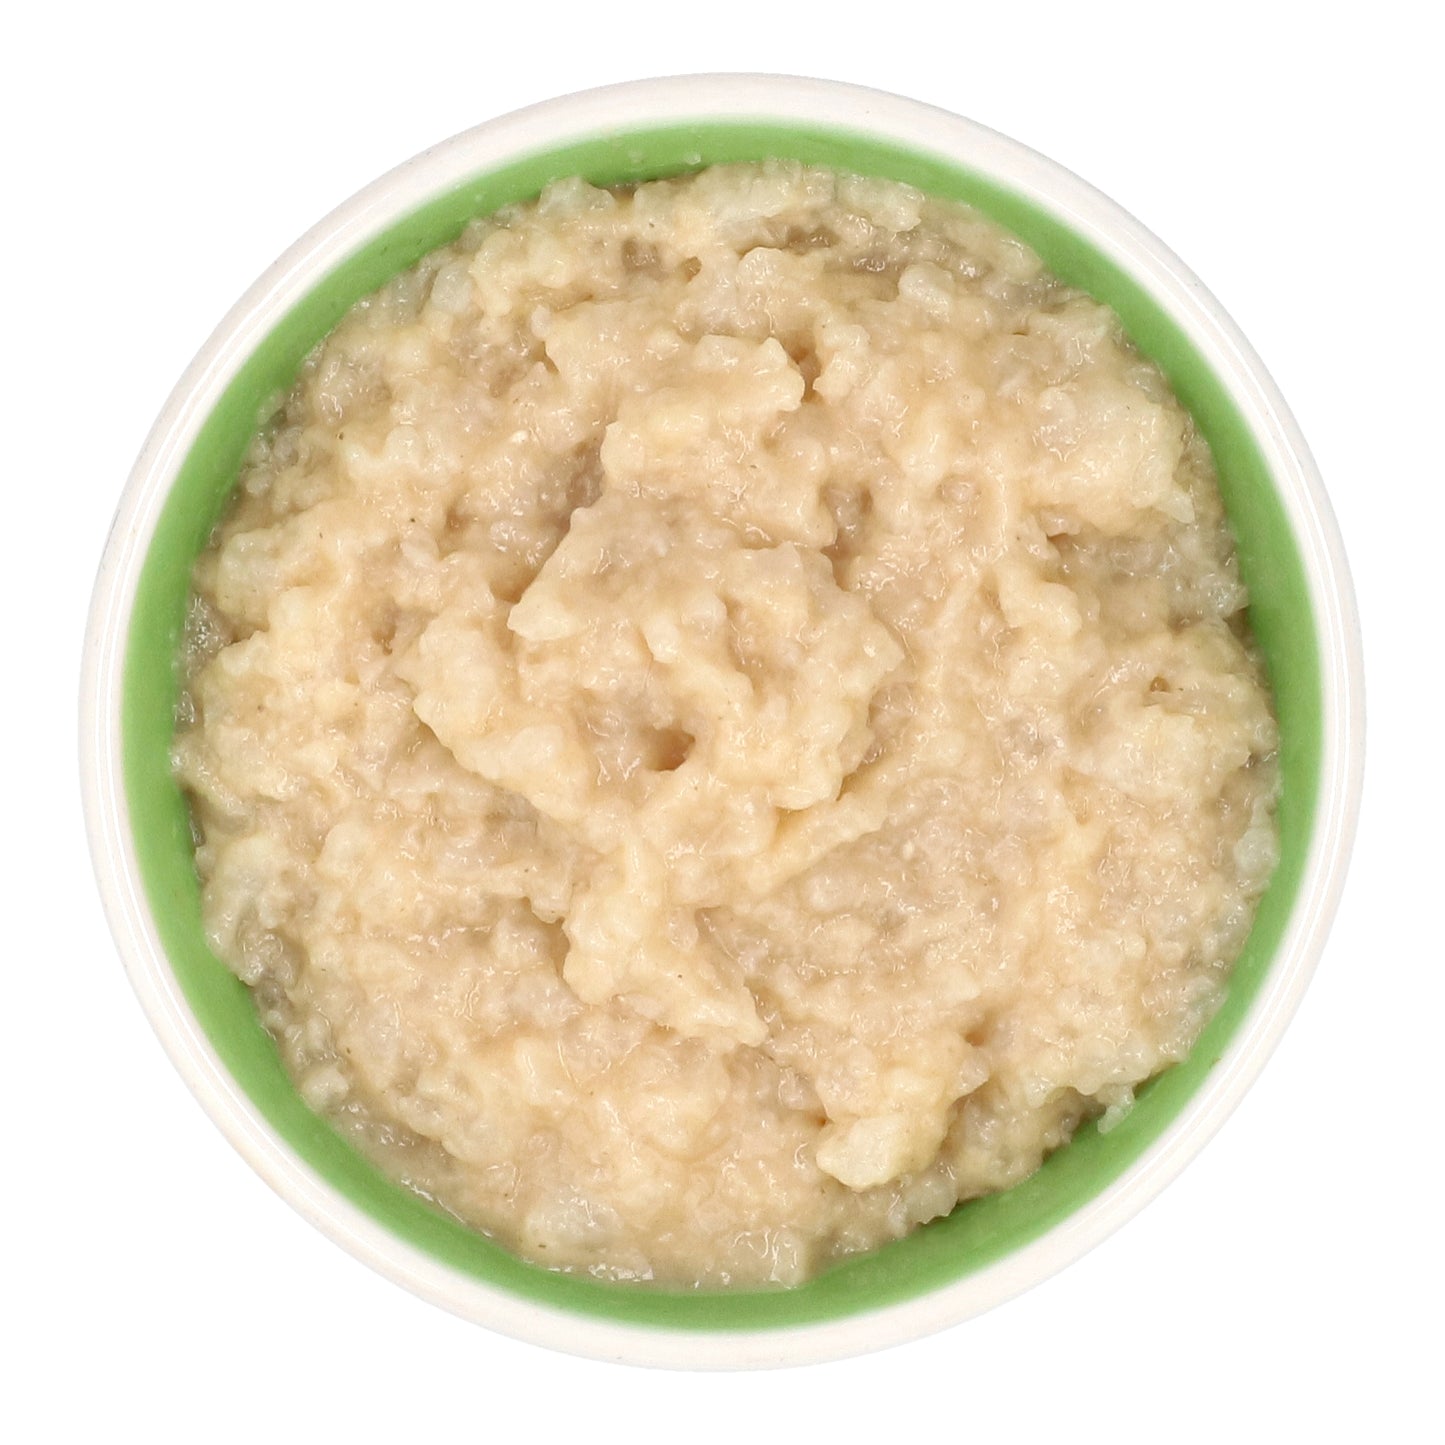 Eusik - 8-Pk Baby Rice Porridge (Mushroom & Cheese) 145g, 8mths+